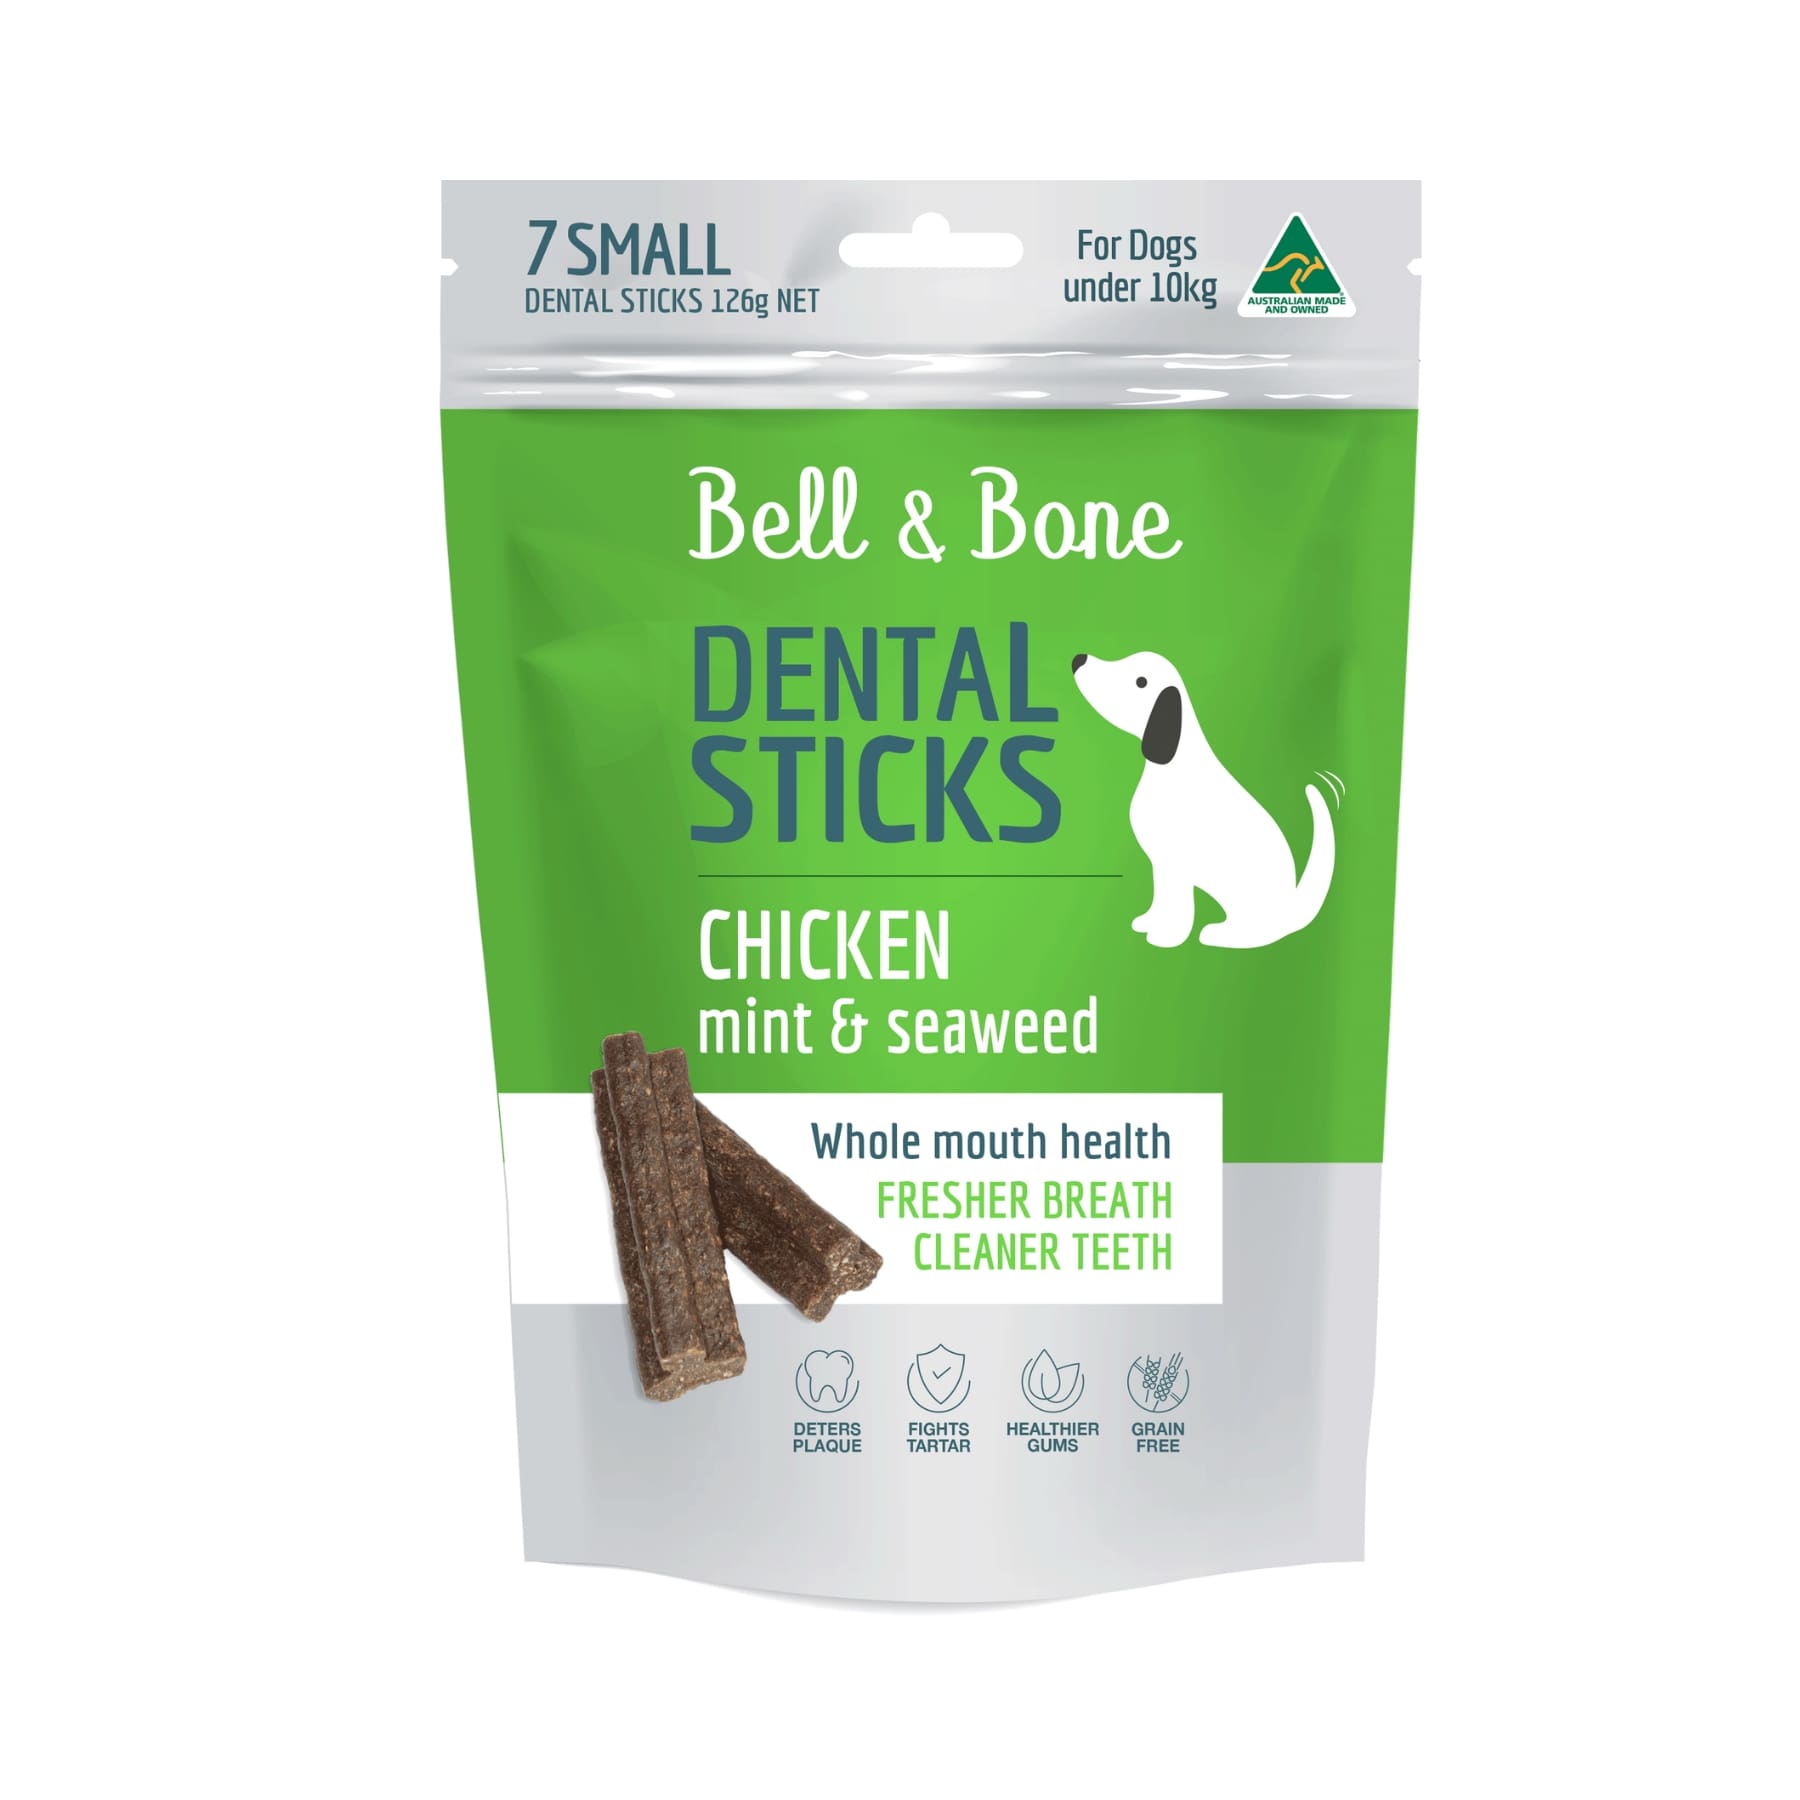 Bell & Bone Dental Sticks Chicken, Mint & Seaweed. Dental Treats for Small Dogs - Under 10kg